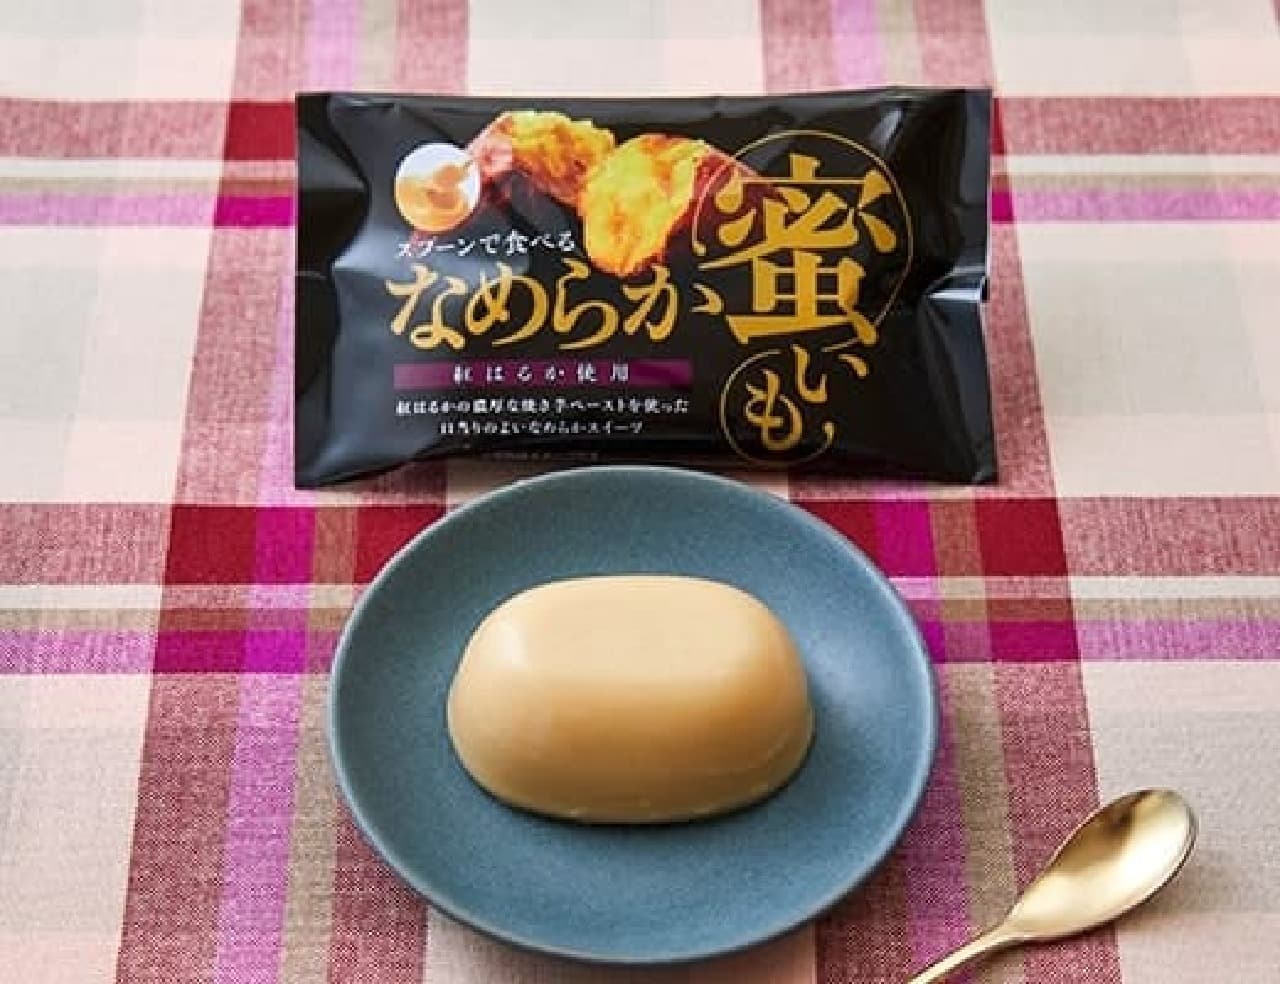 Lawson "Tokushima Sangyo Smooth Honey Potato 70g"